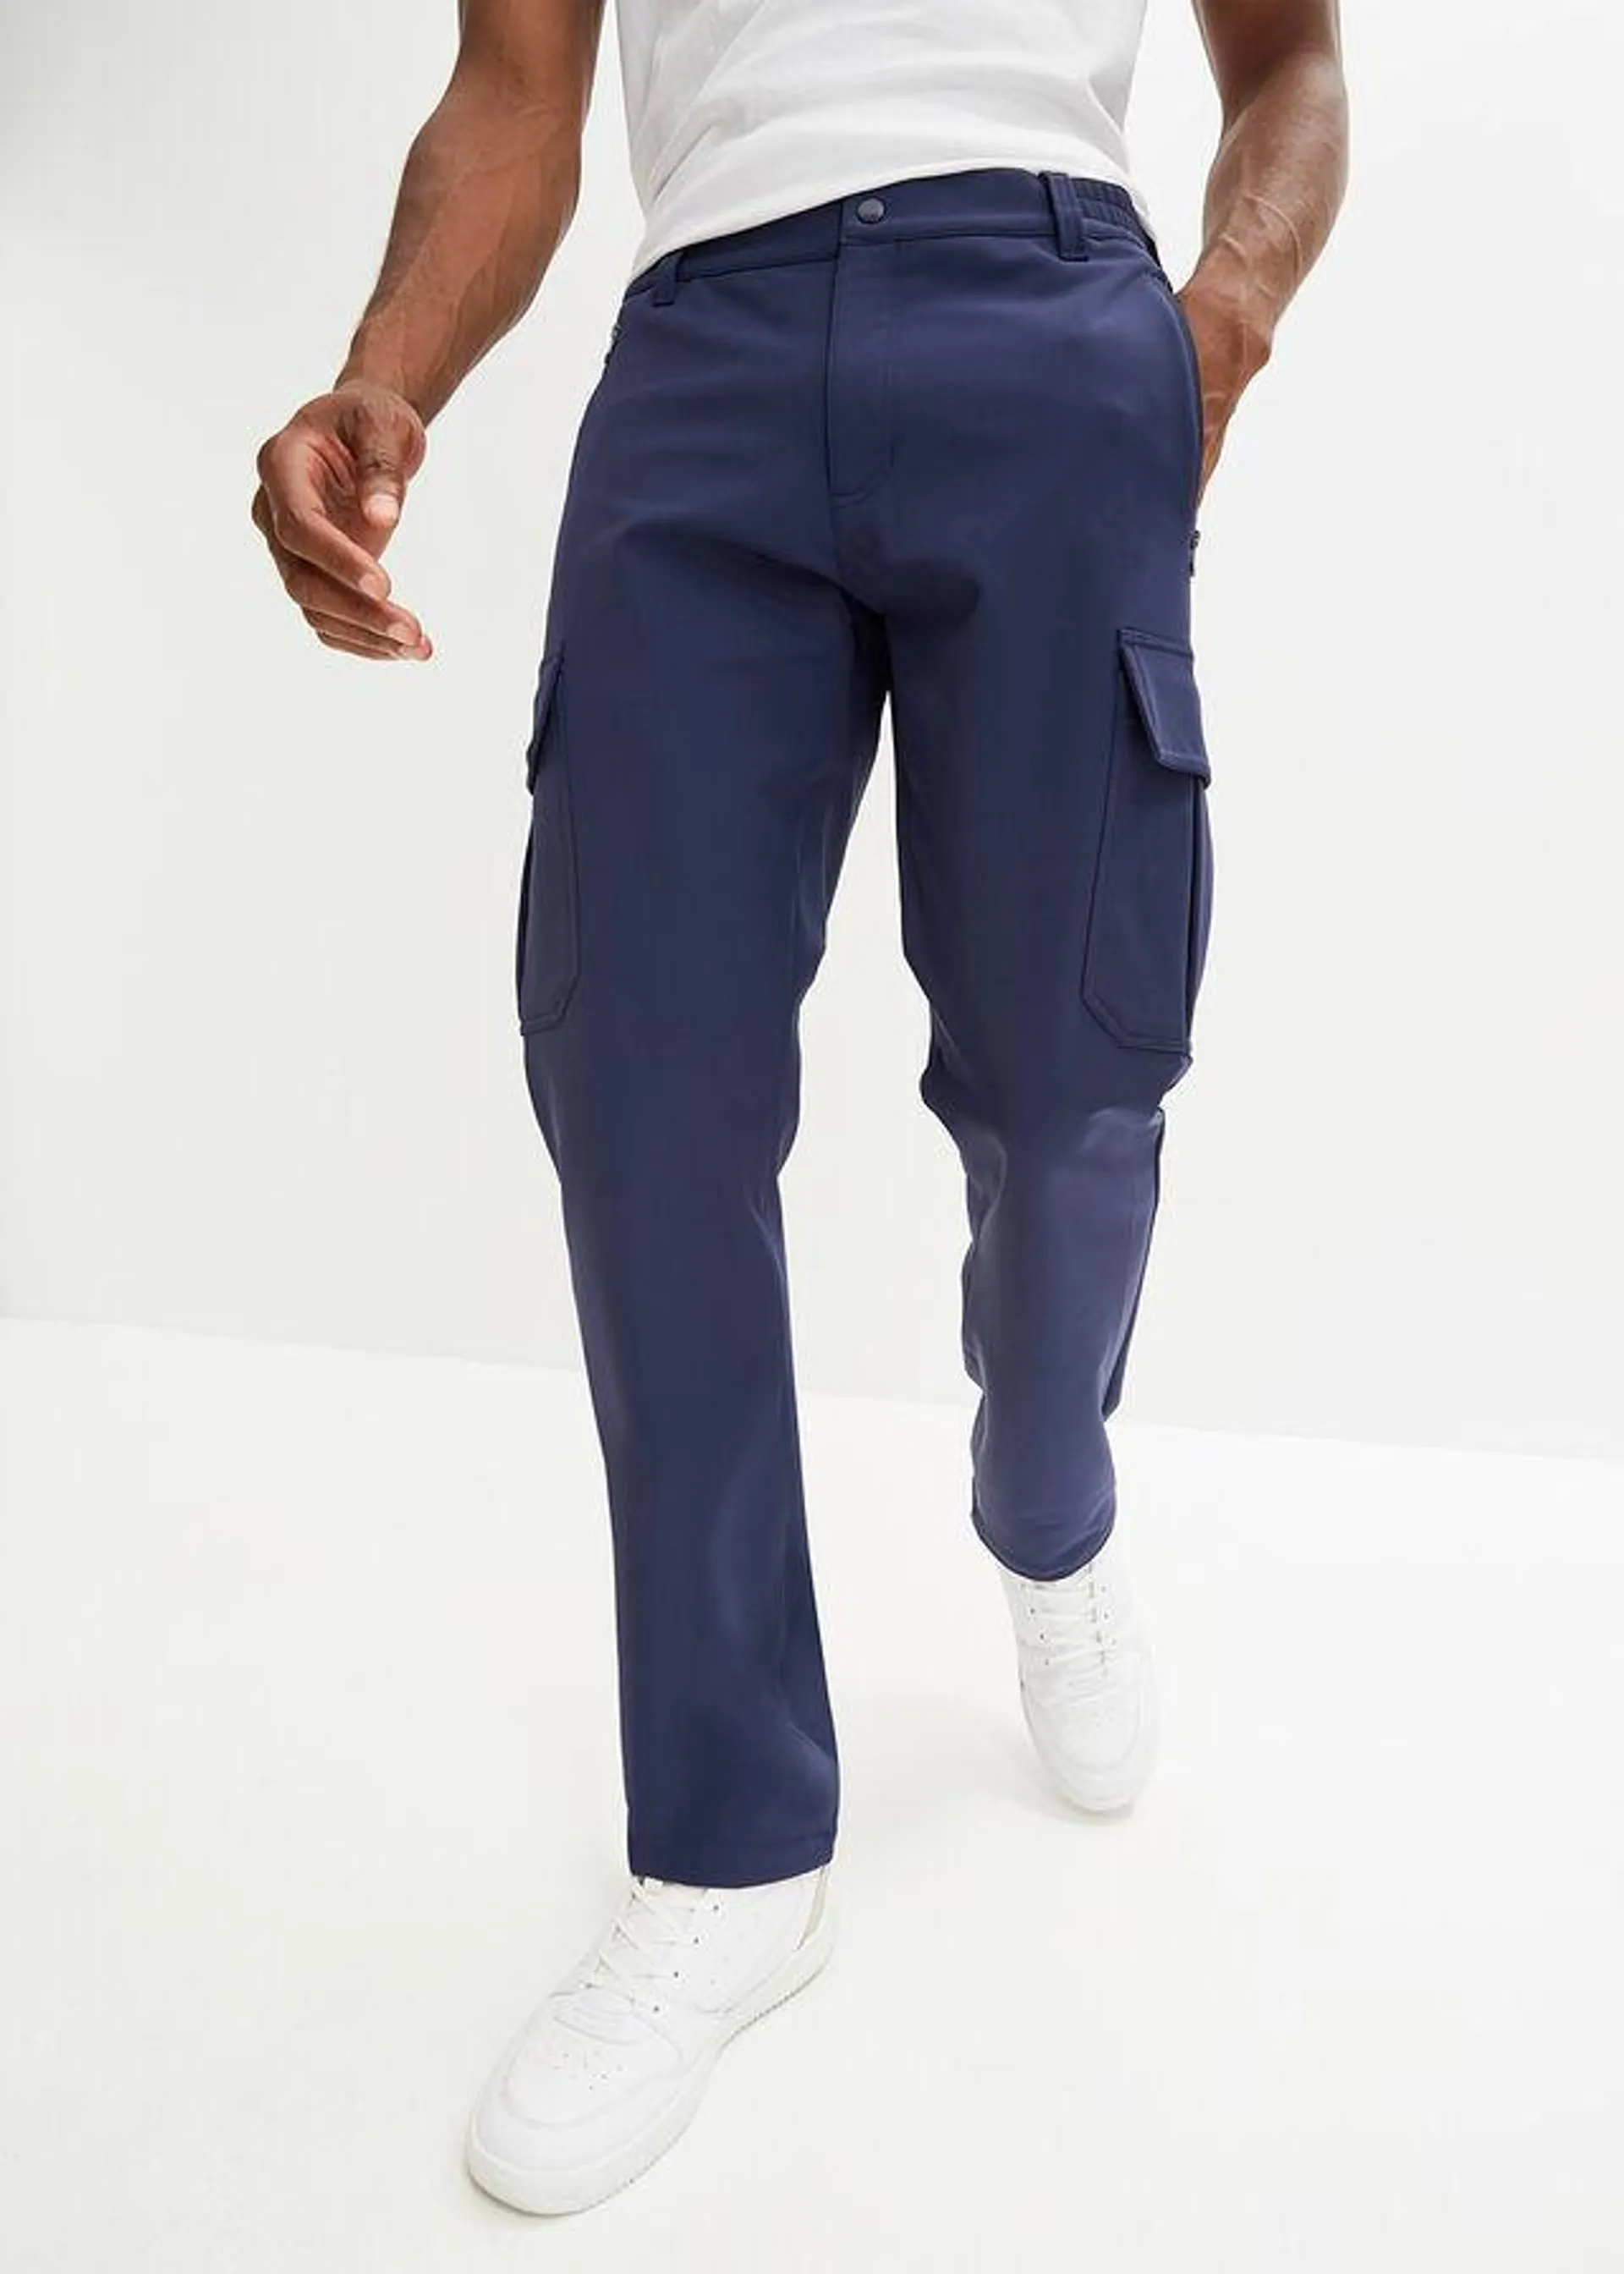 Pantaloni din material funcţional cu stretch-4 direcţii